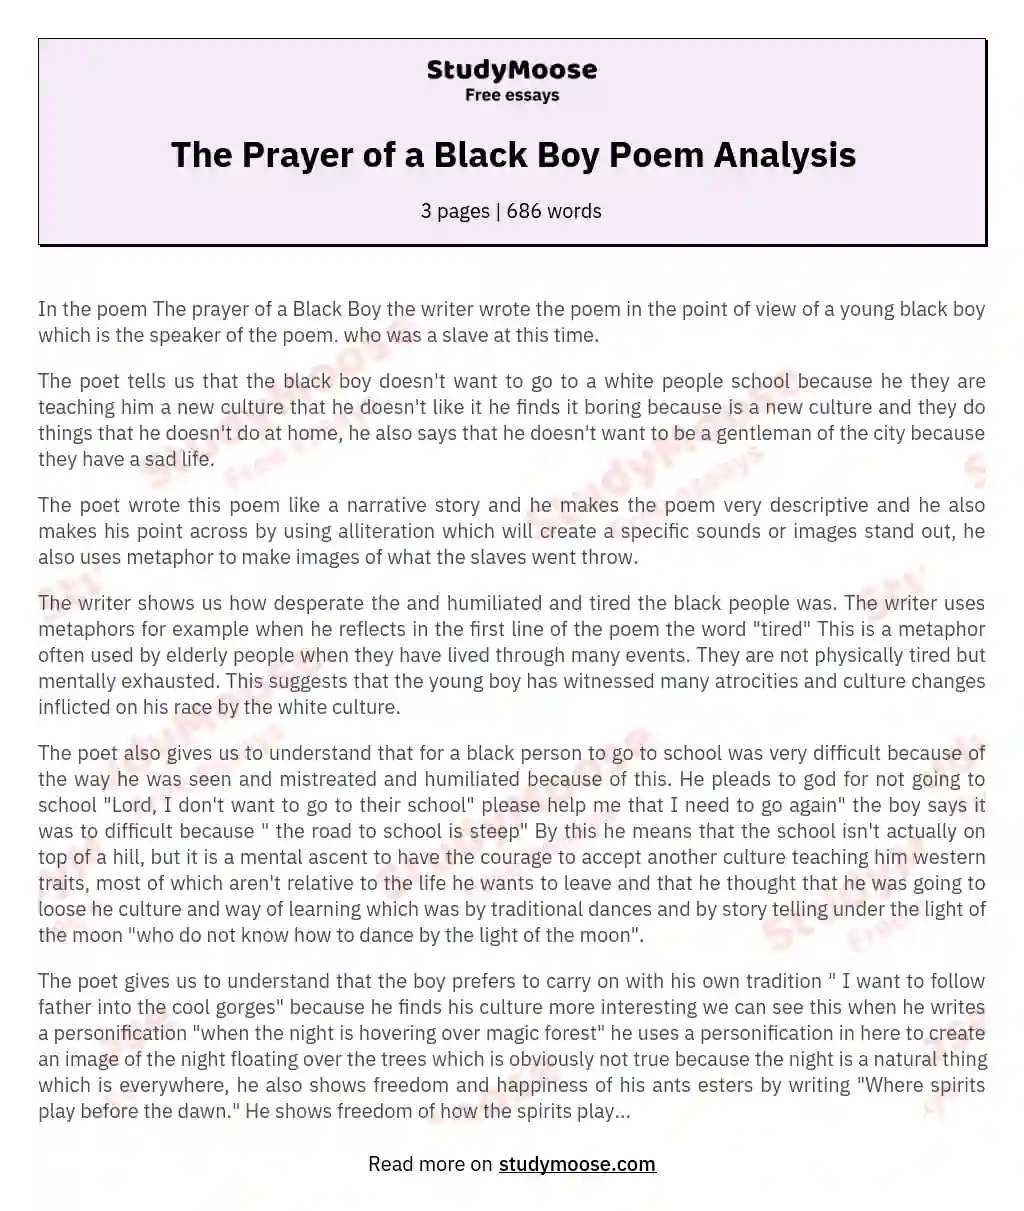 The Prayer of a Black Boy Poem Analysis